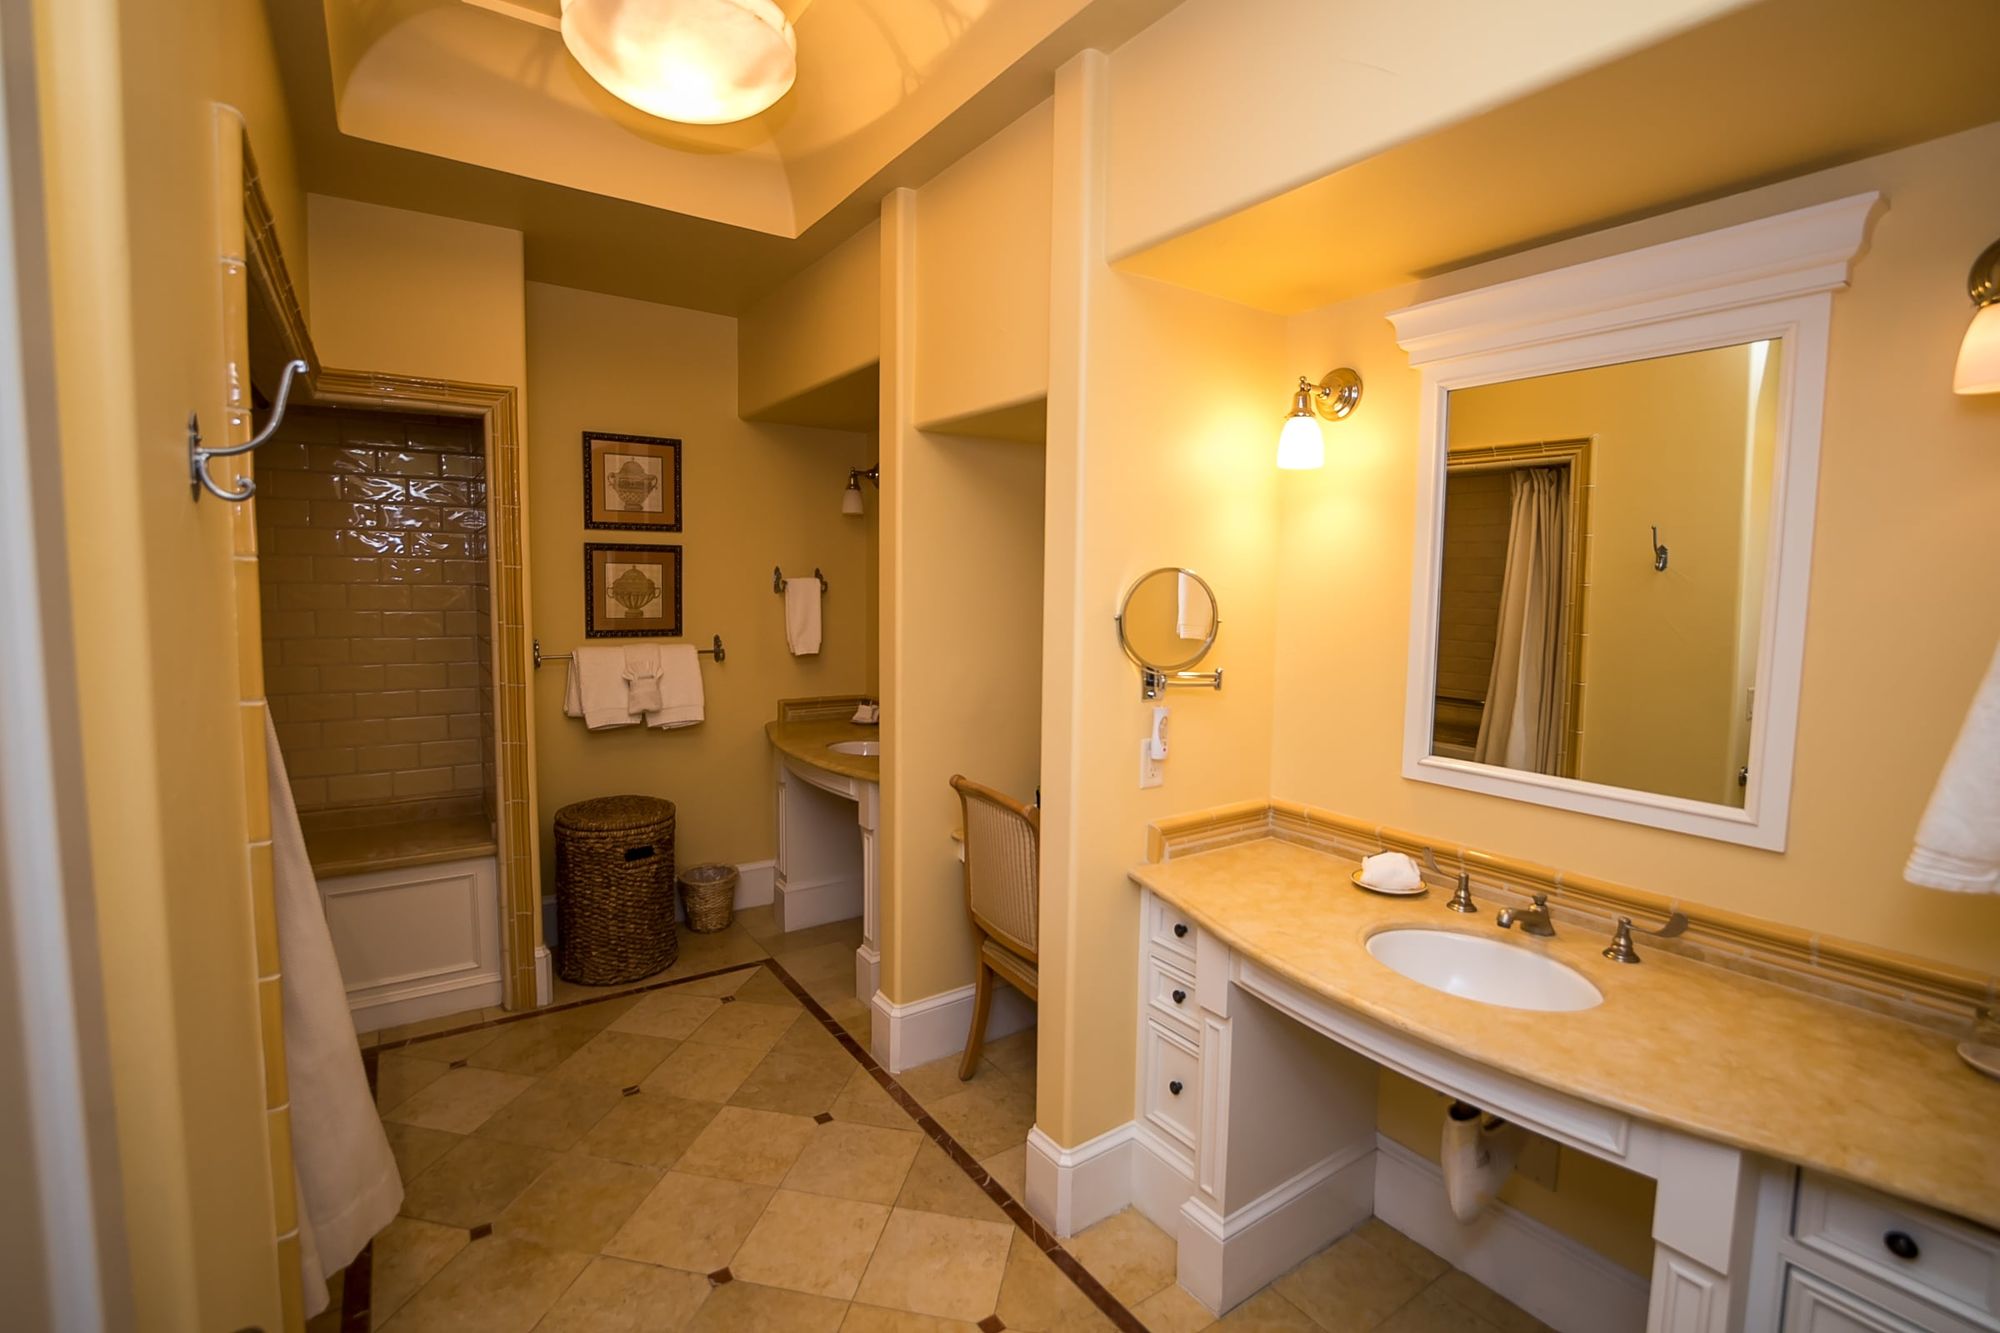 Bathroom with two vanities and tile floors